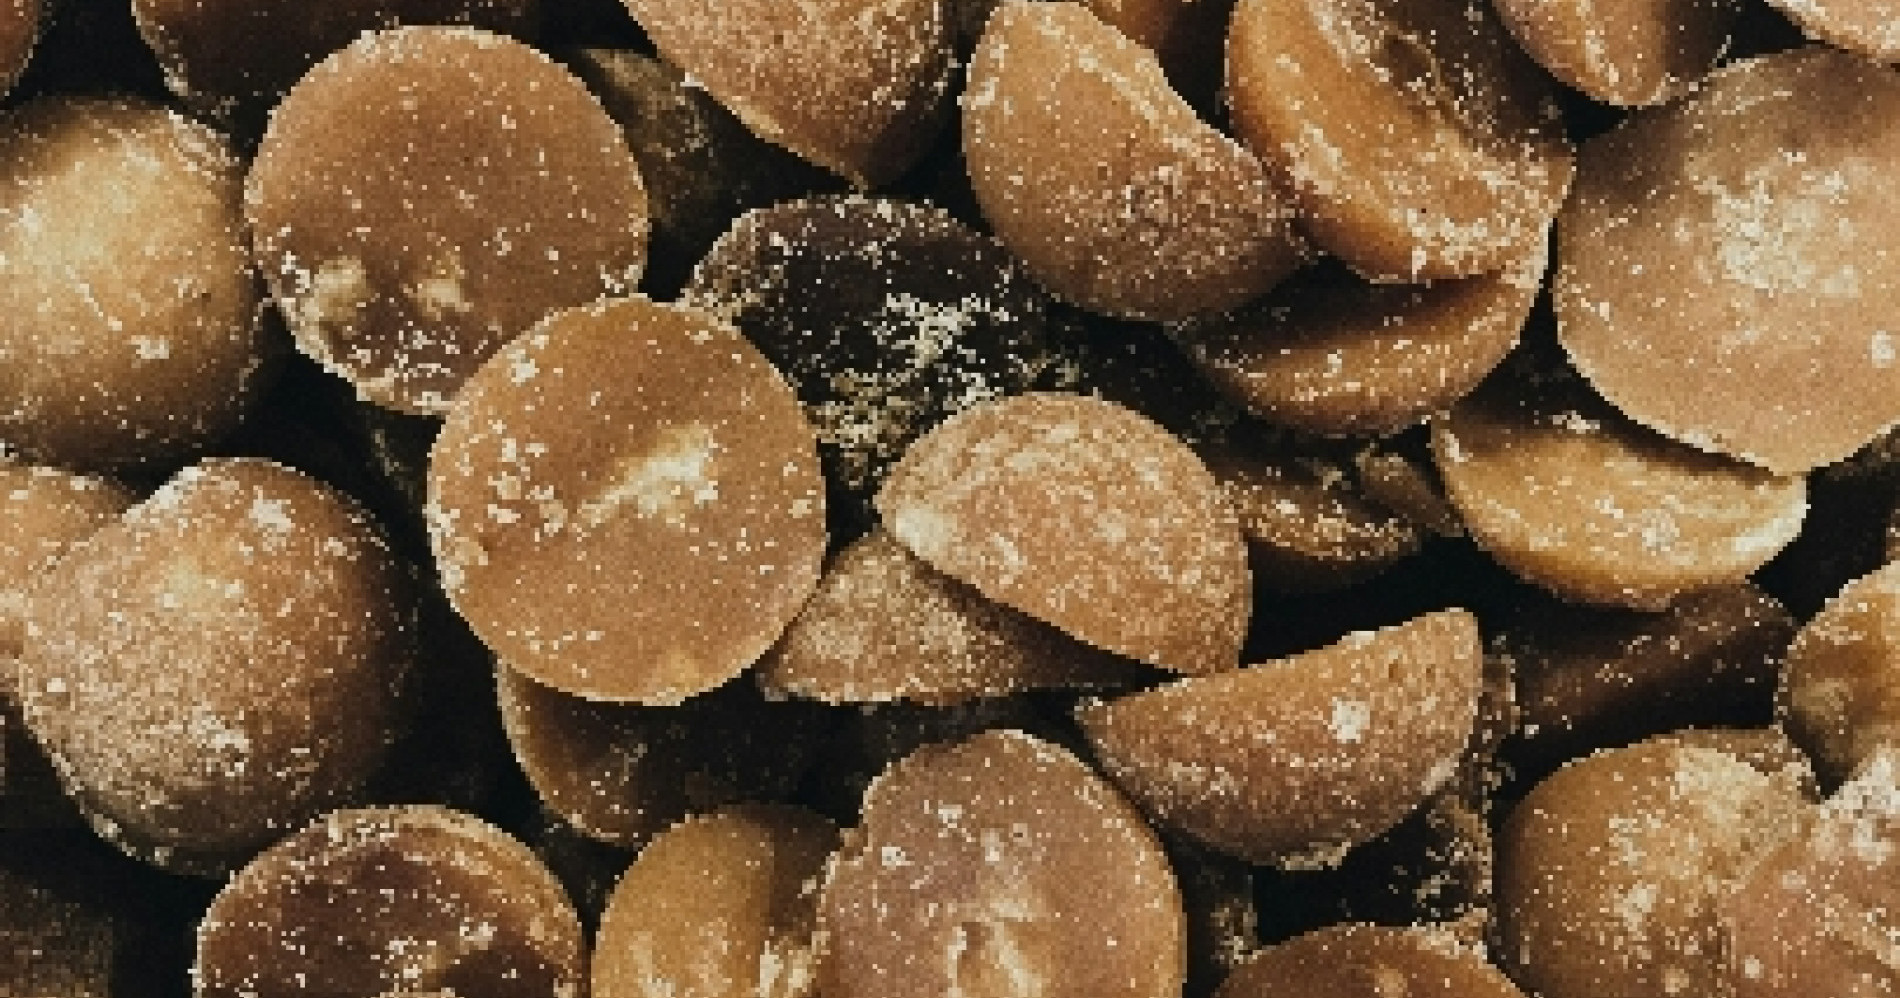 Jenis gula (Sumber: www.unsplash.com)